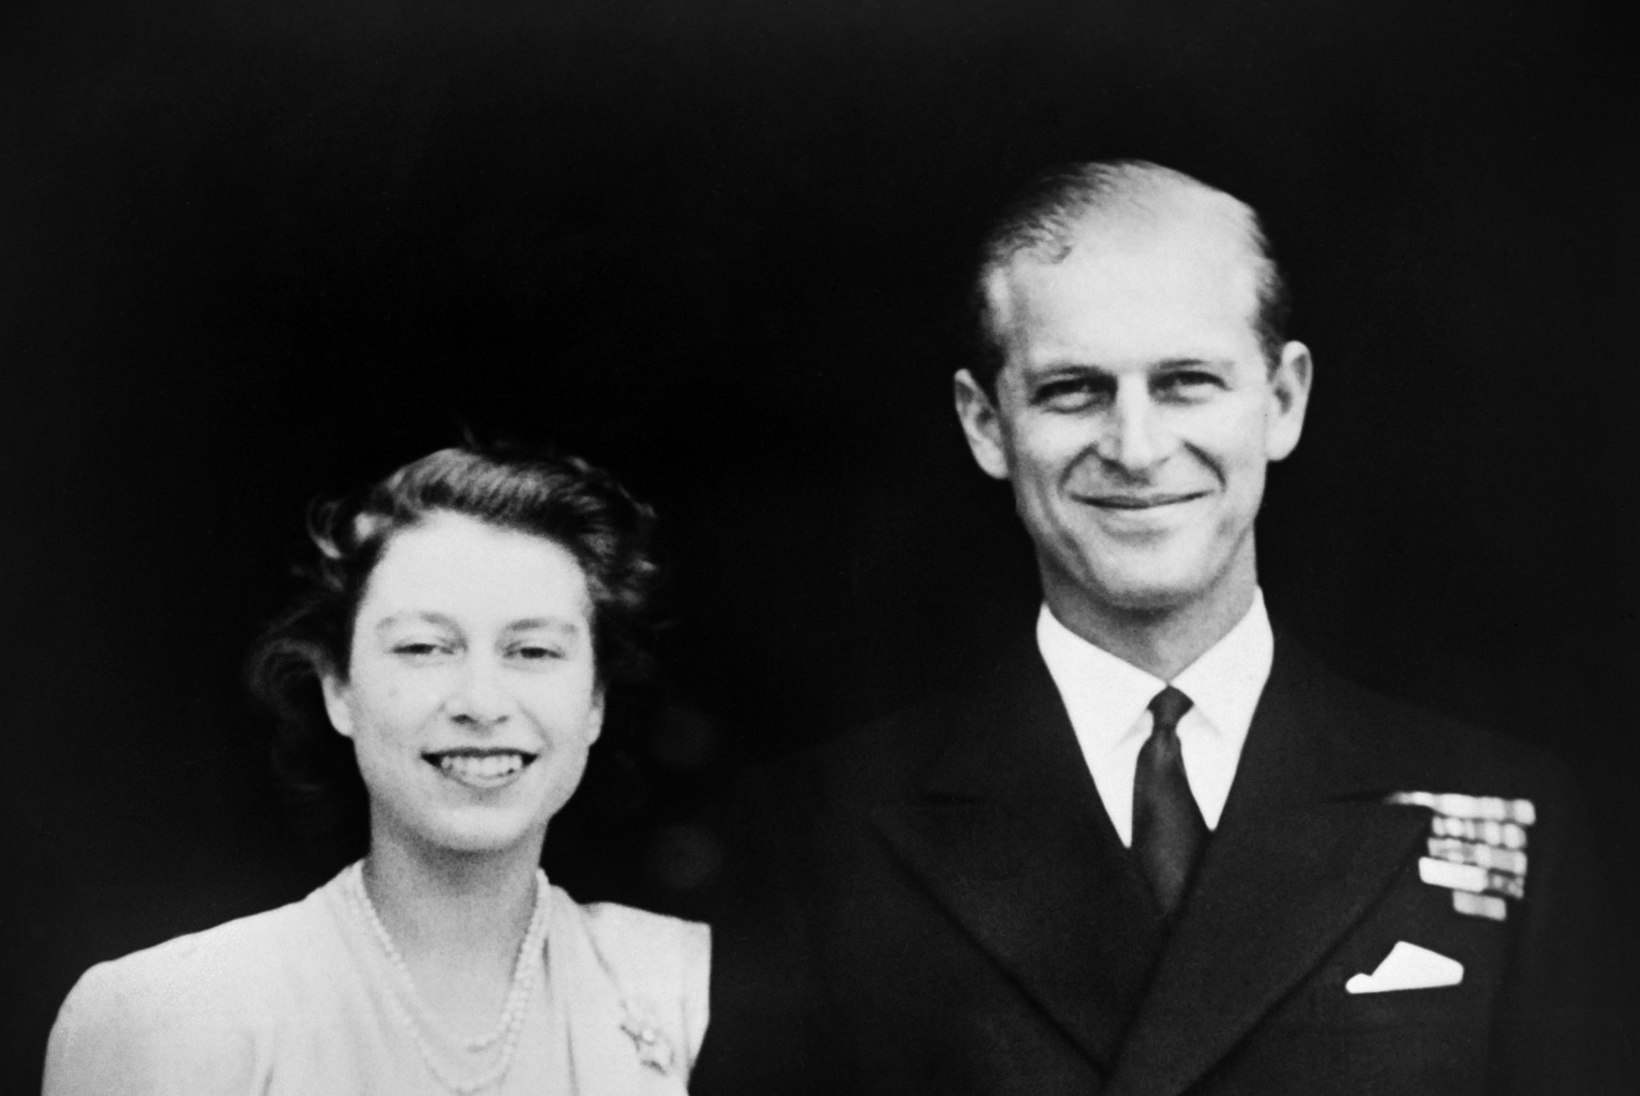 Kuninganna Elizabeth II oli Jackie Kennedy peale armukade?